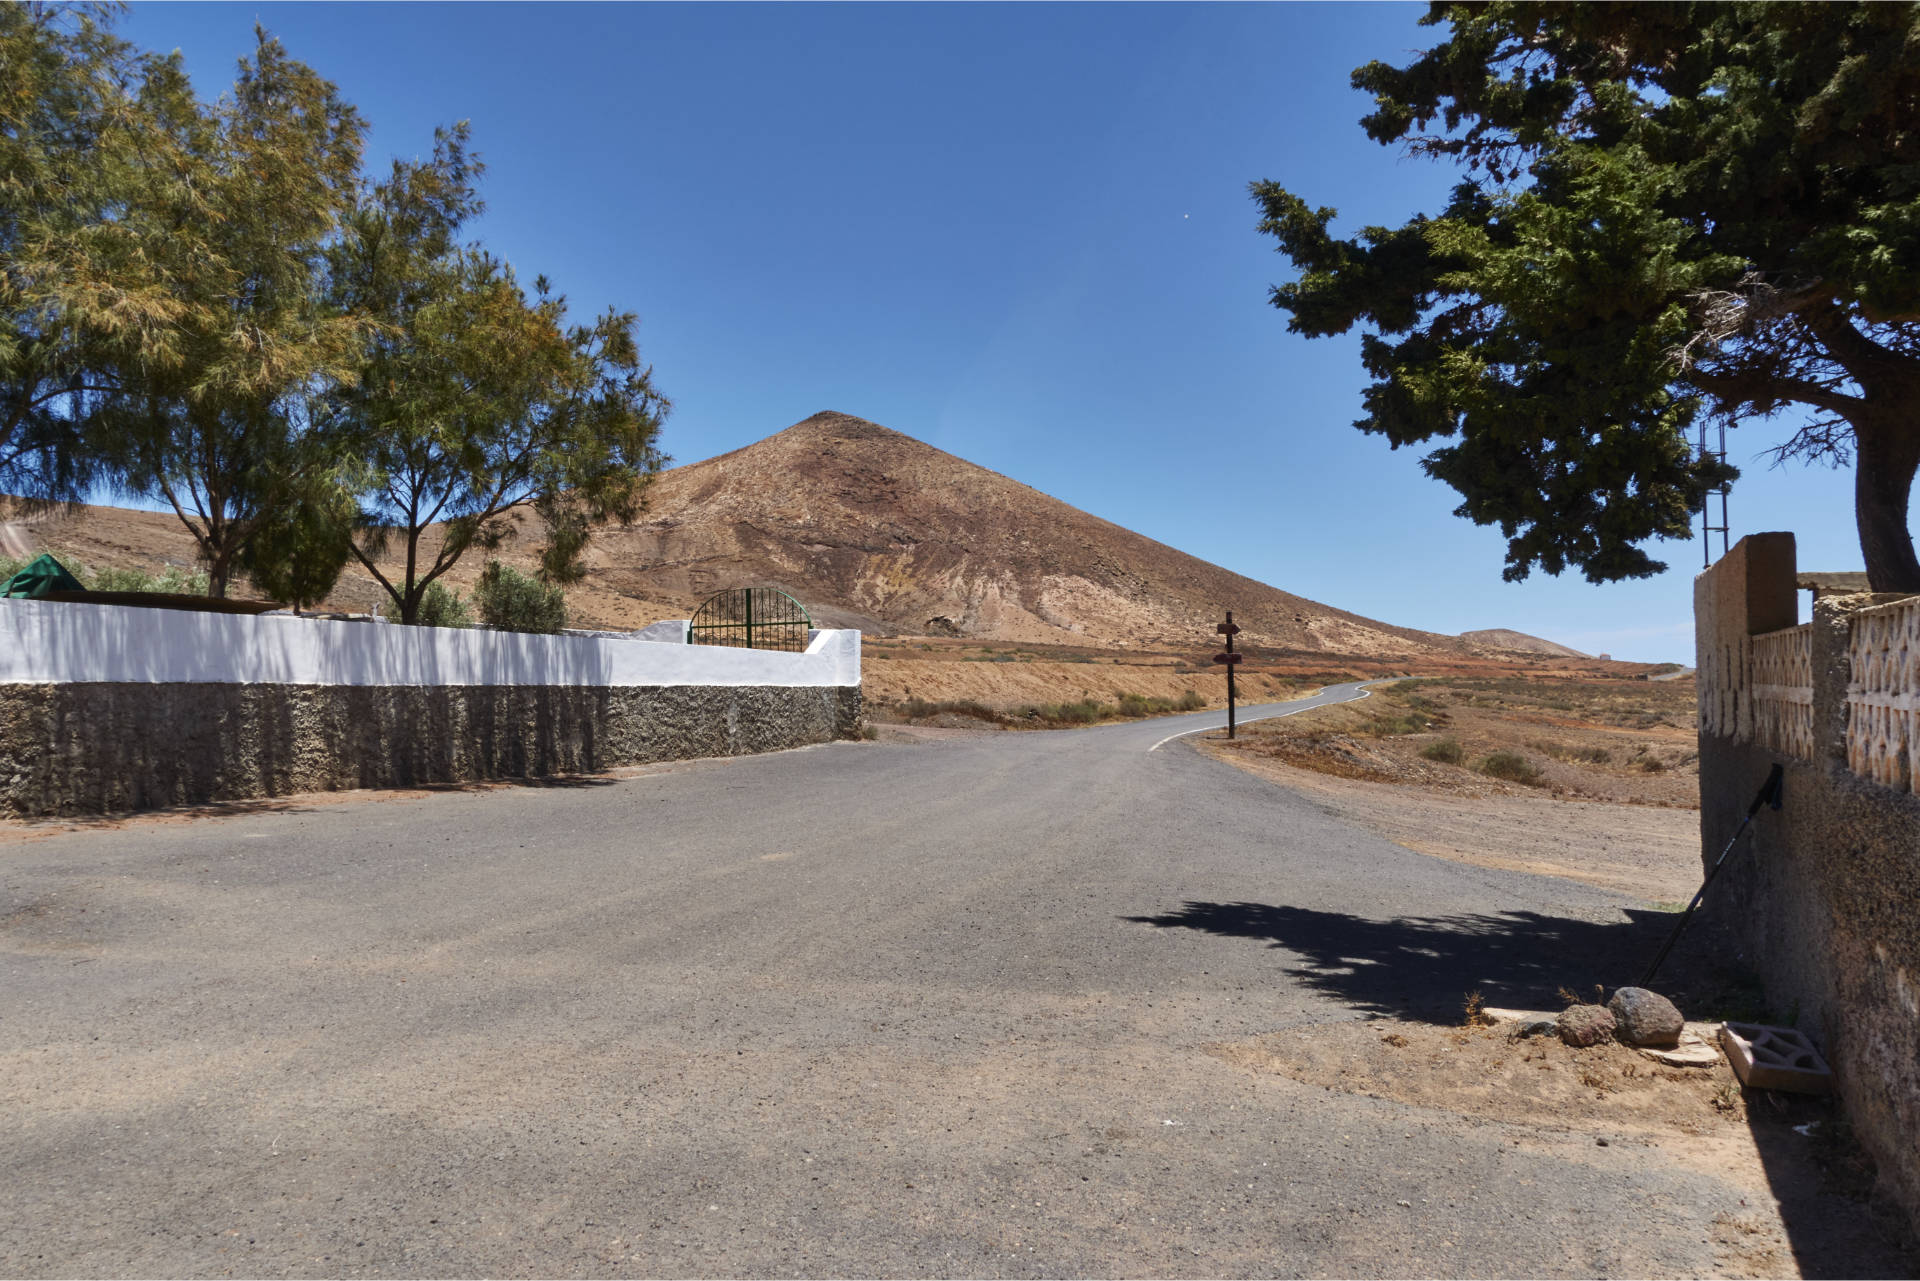 Wandern Fuerteventura – durch das Valle de Tetir auf den Morro de Cagadas Blandas (525m).